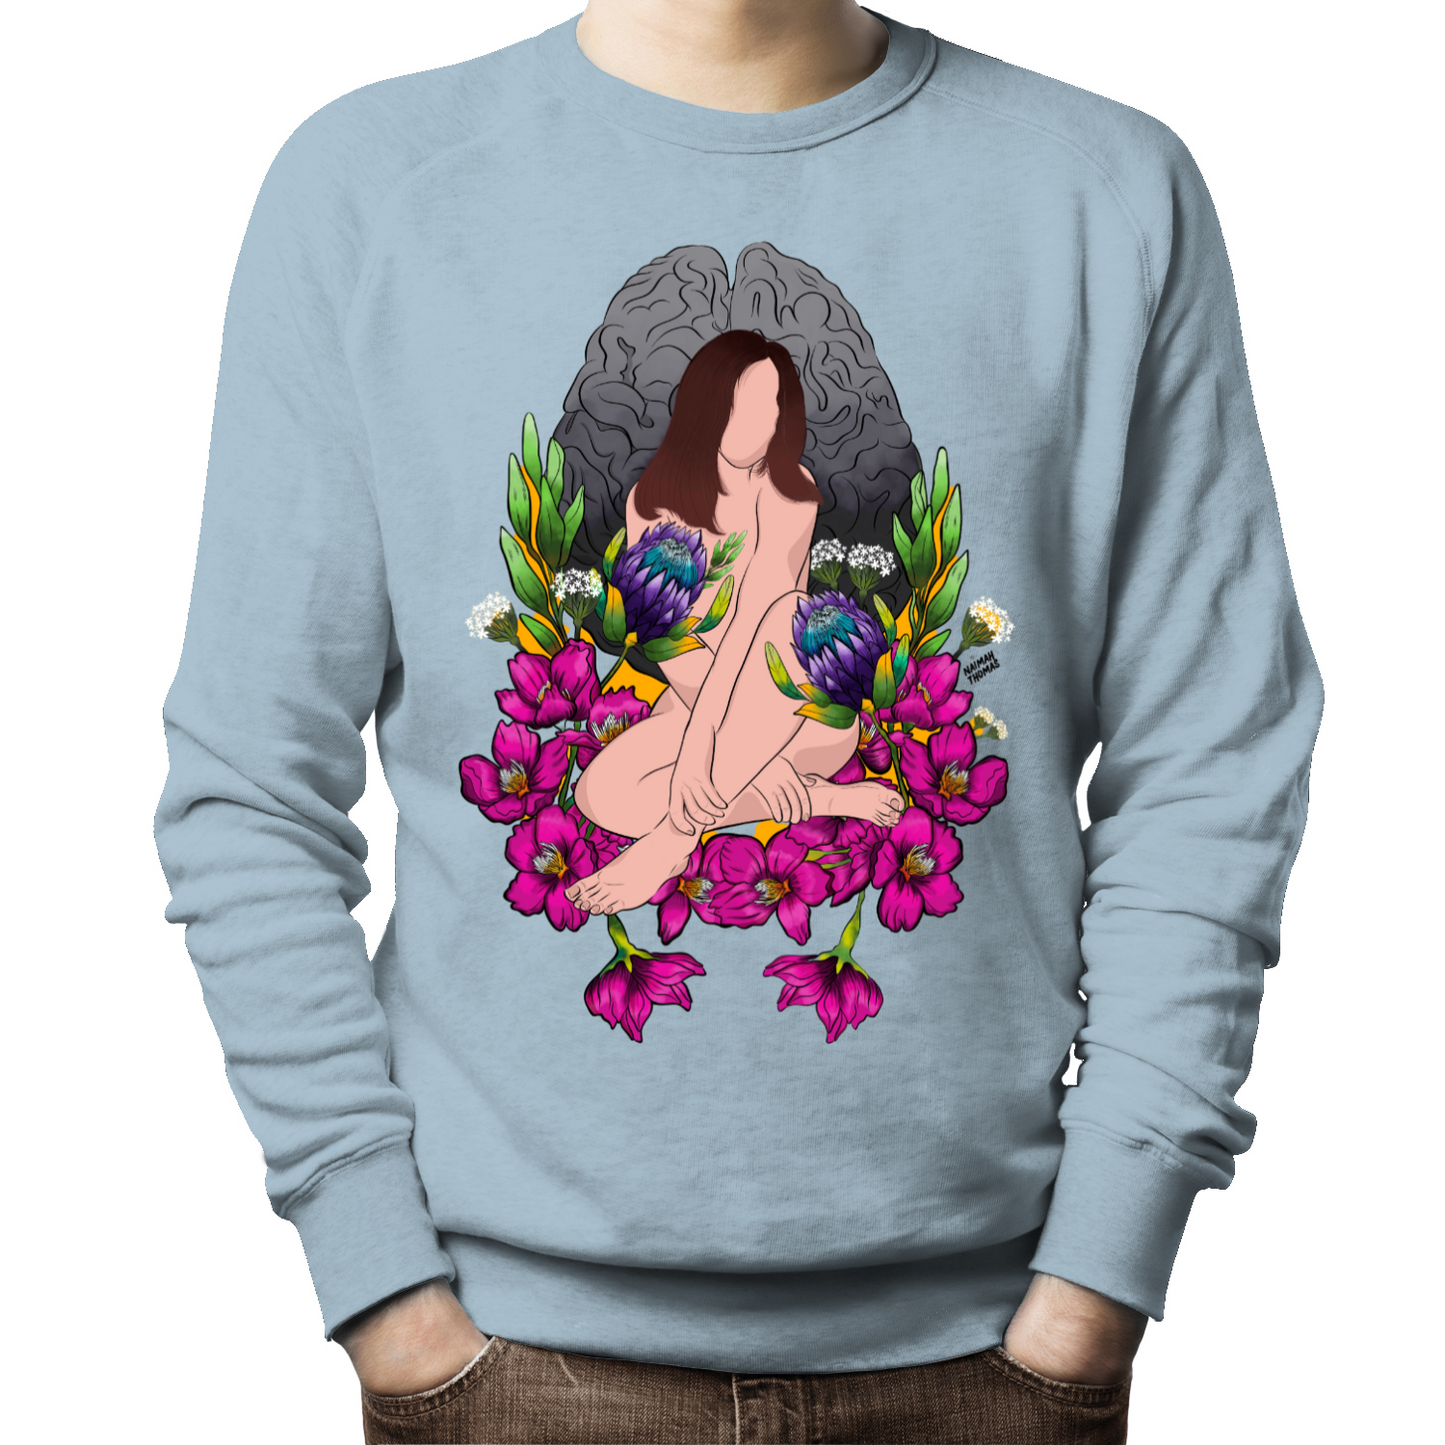 "Wandering amongst the cherry blossoms" Unisex Sweatshirt